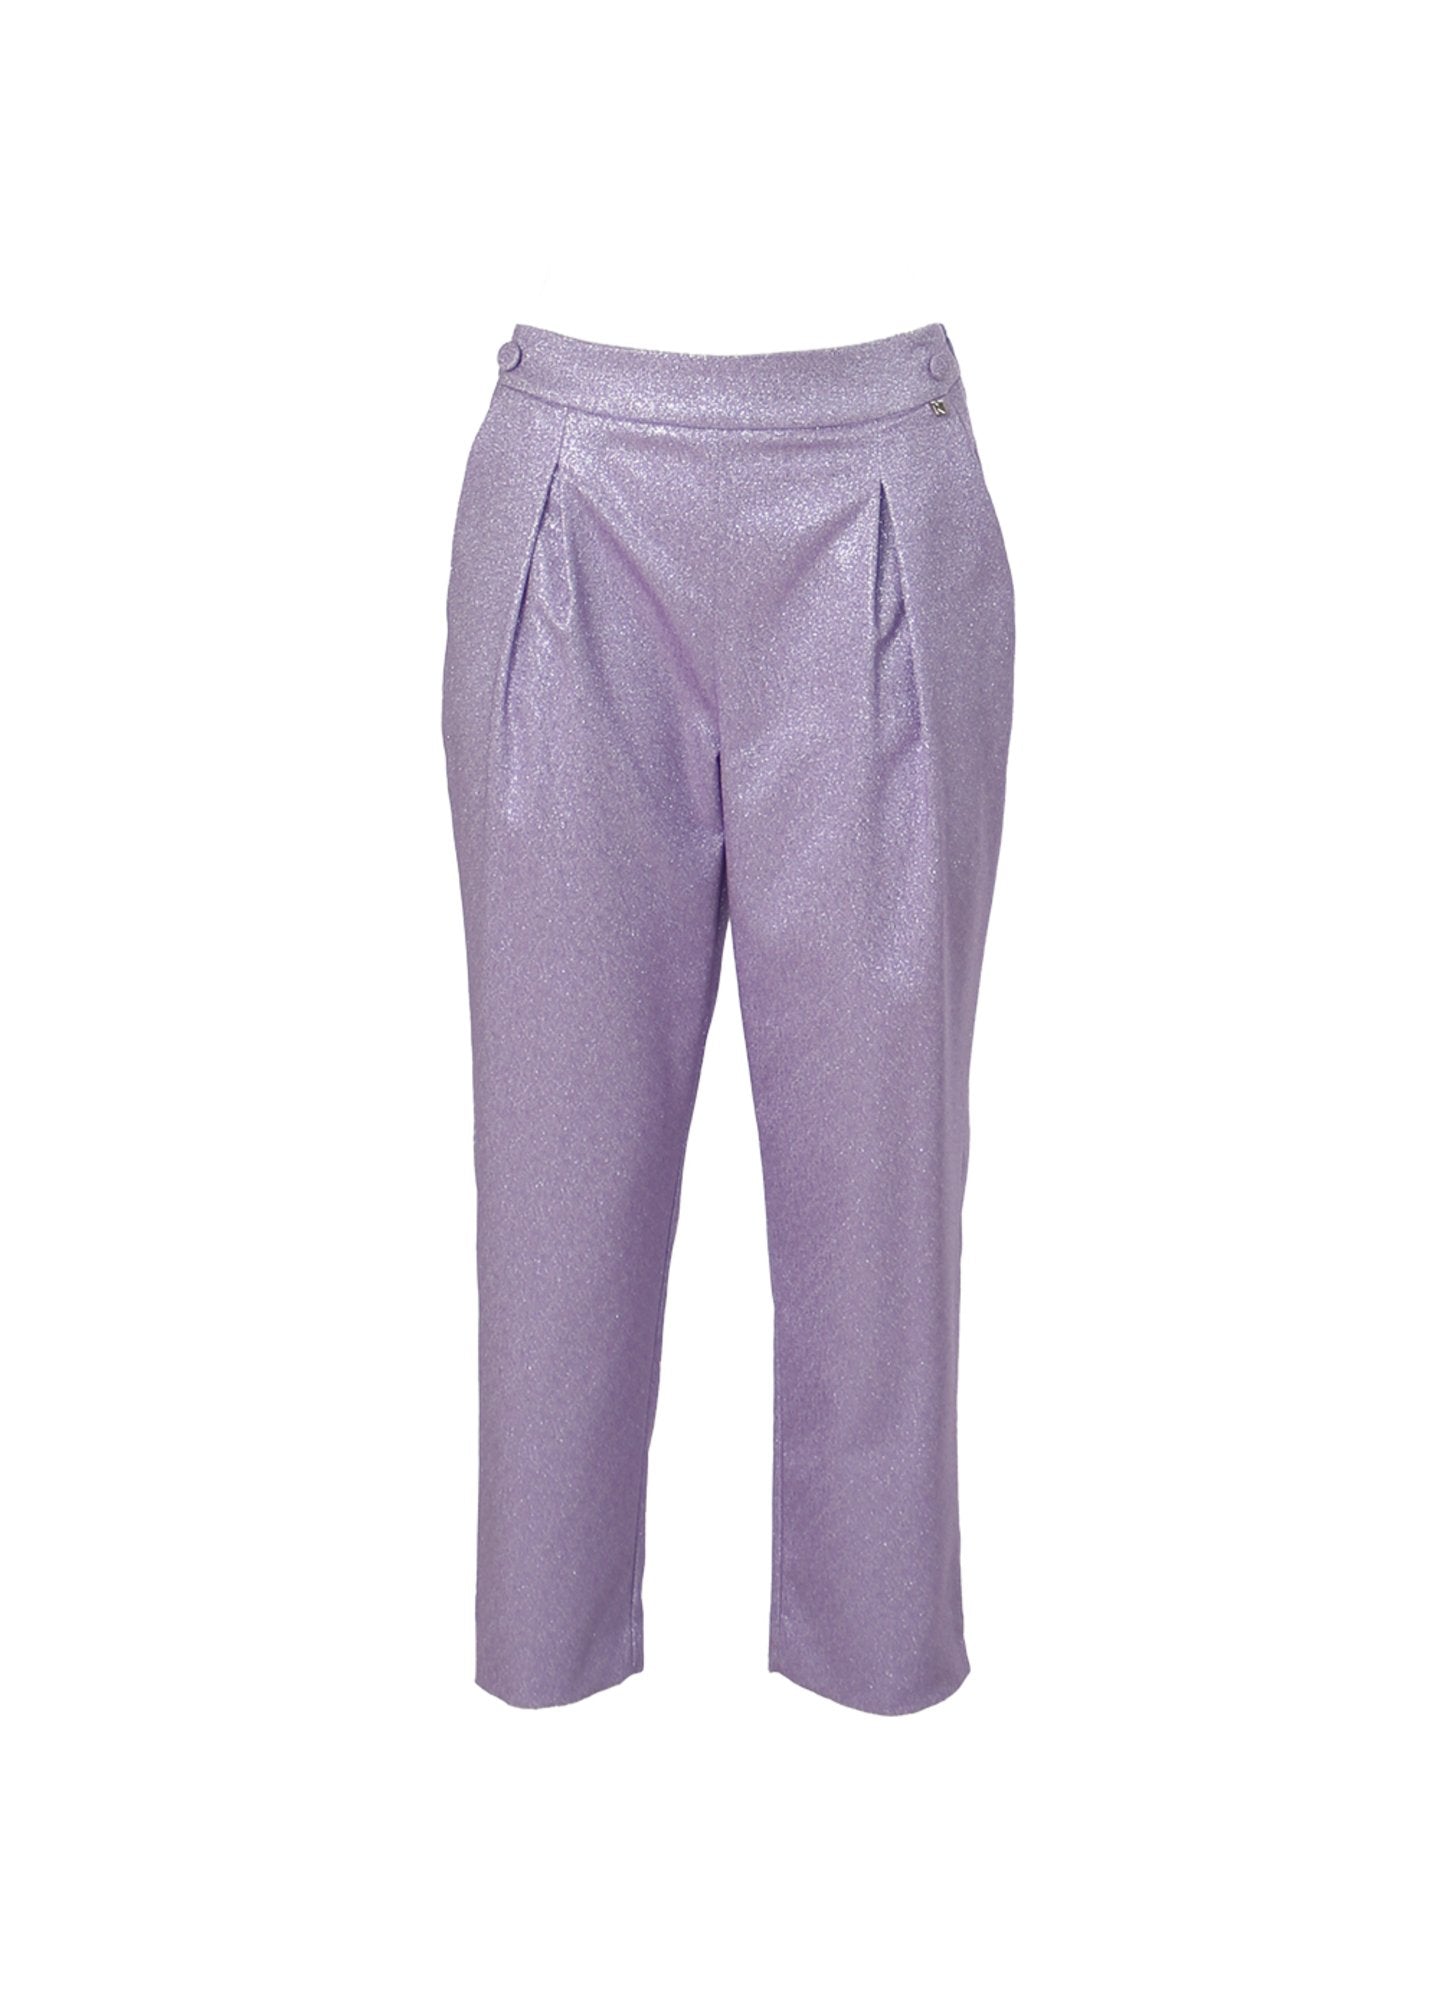 Pantalone Kocca / Lilla - Ideal Moda